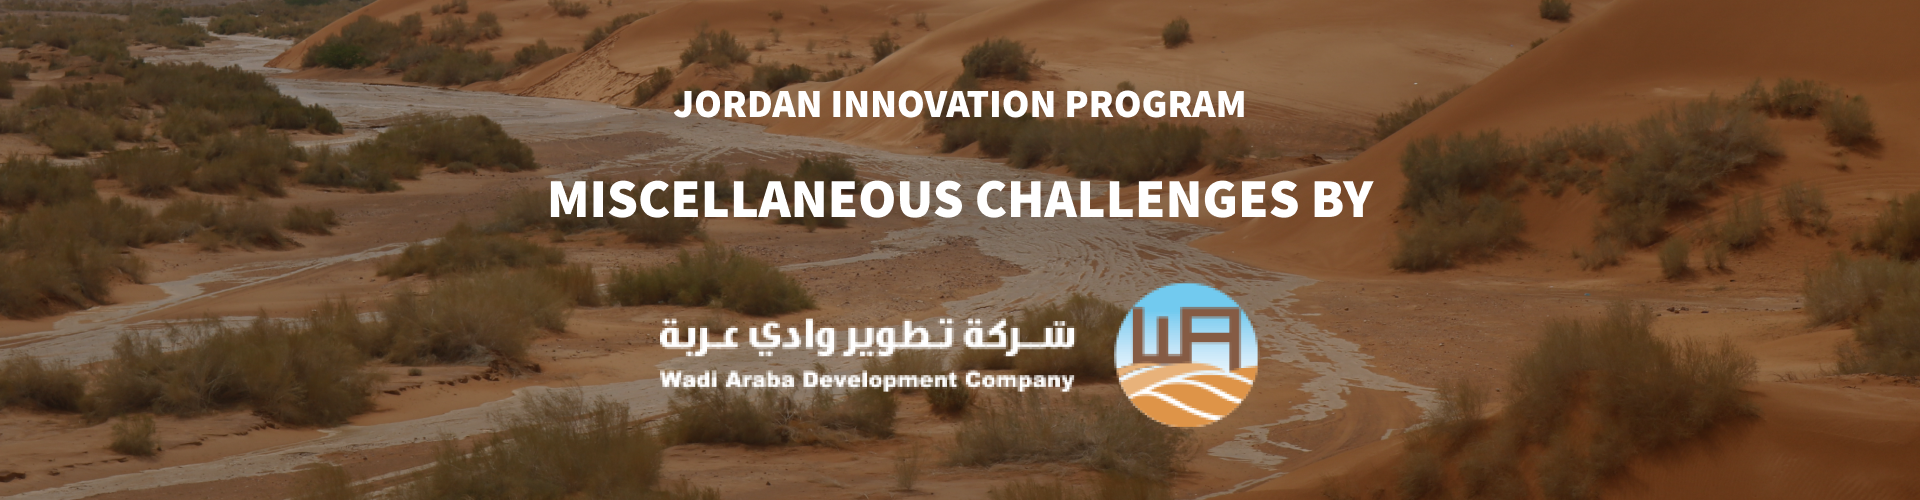 Wadi Araba Development Company: Miscellaneous Challenges - Jordan Innovation Program